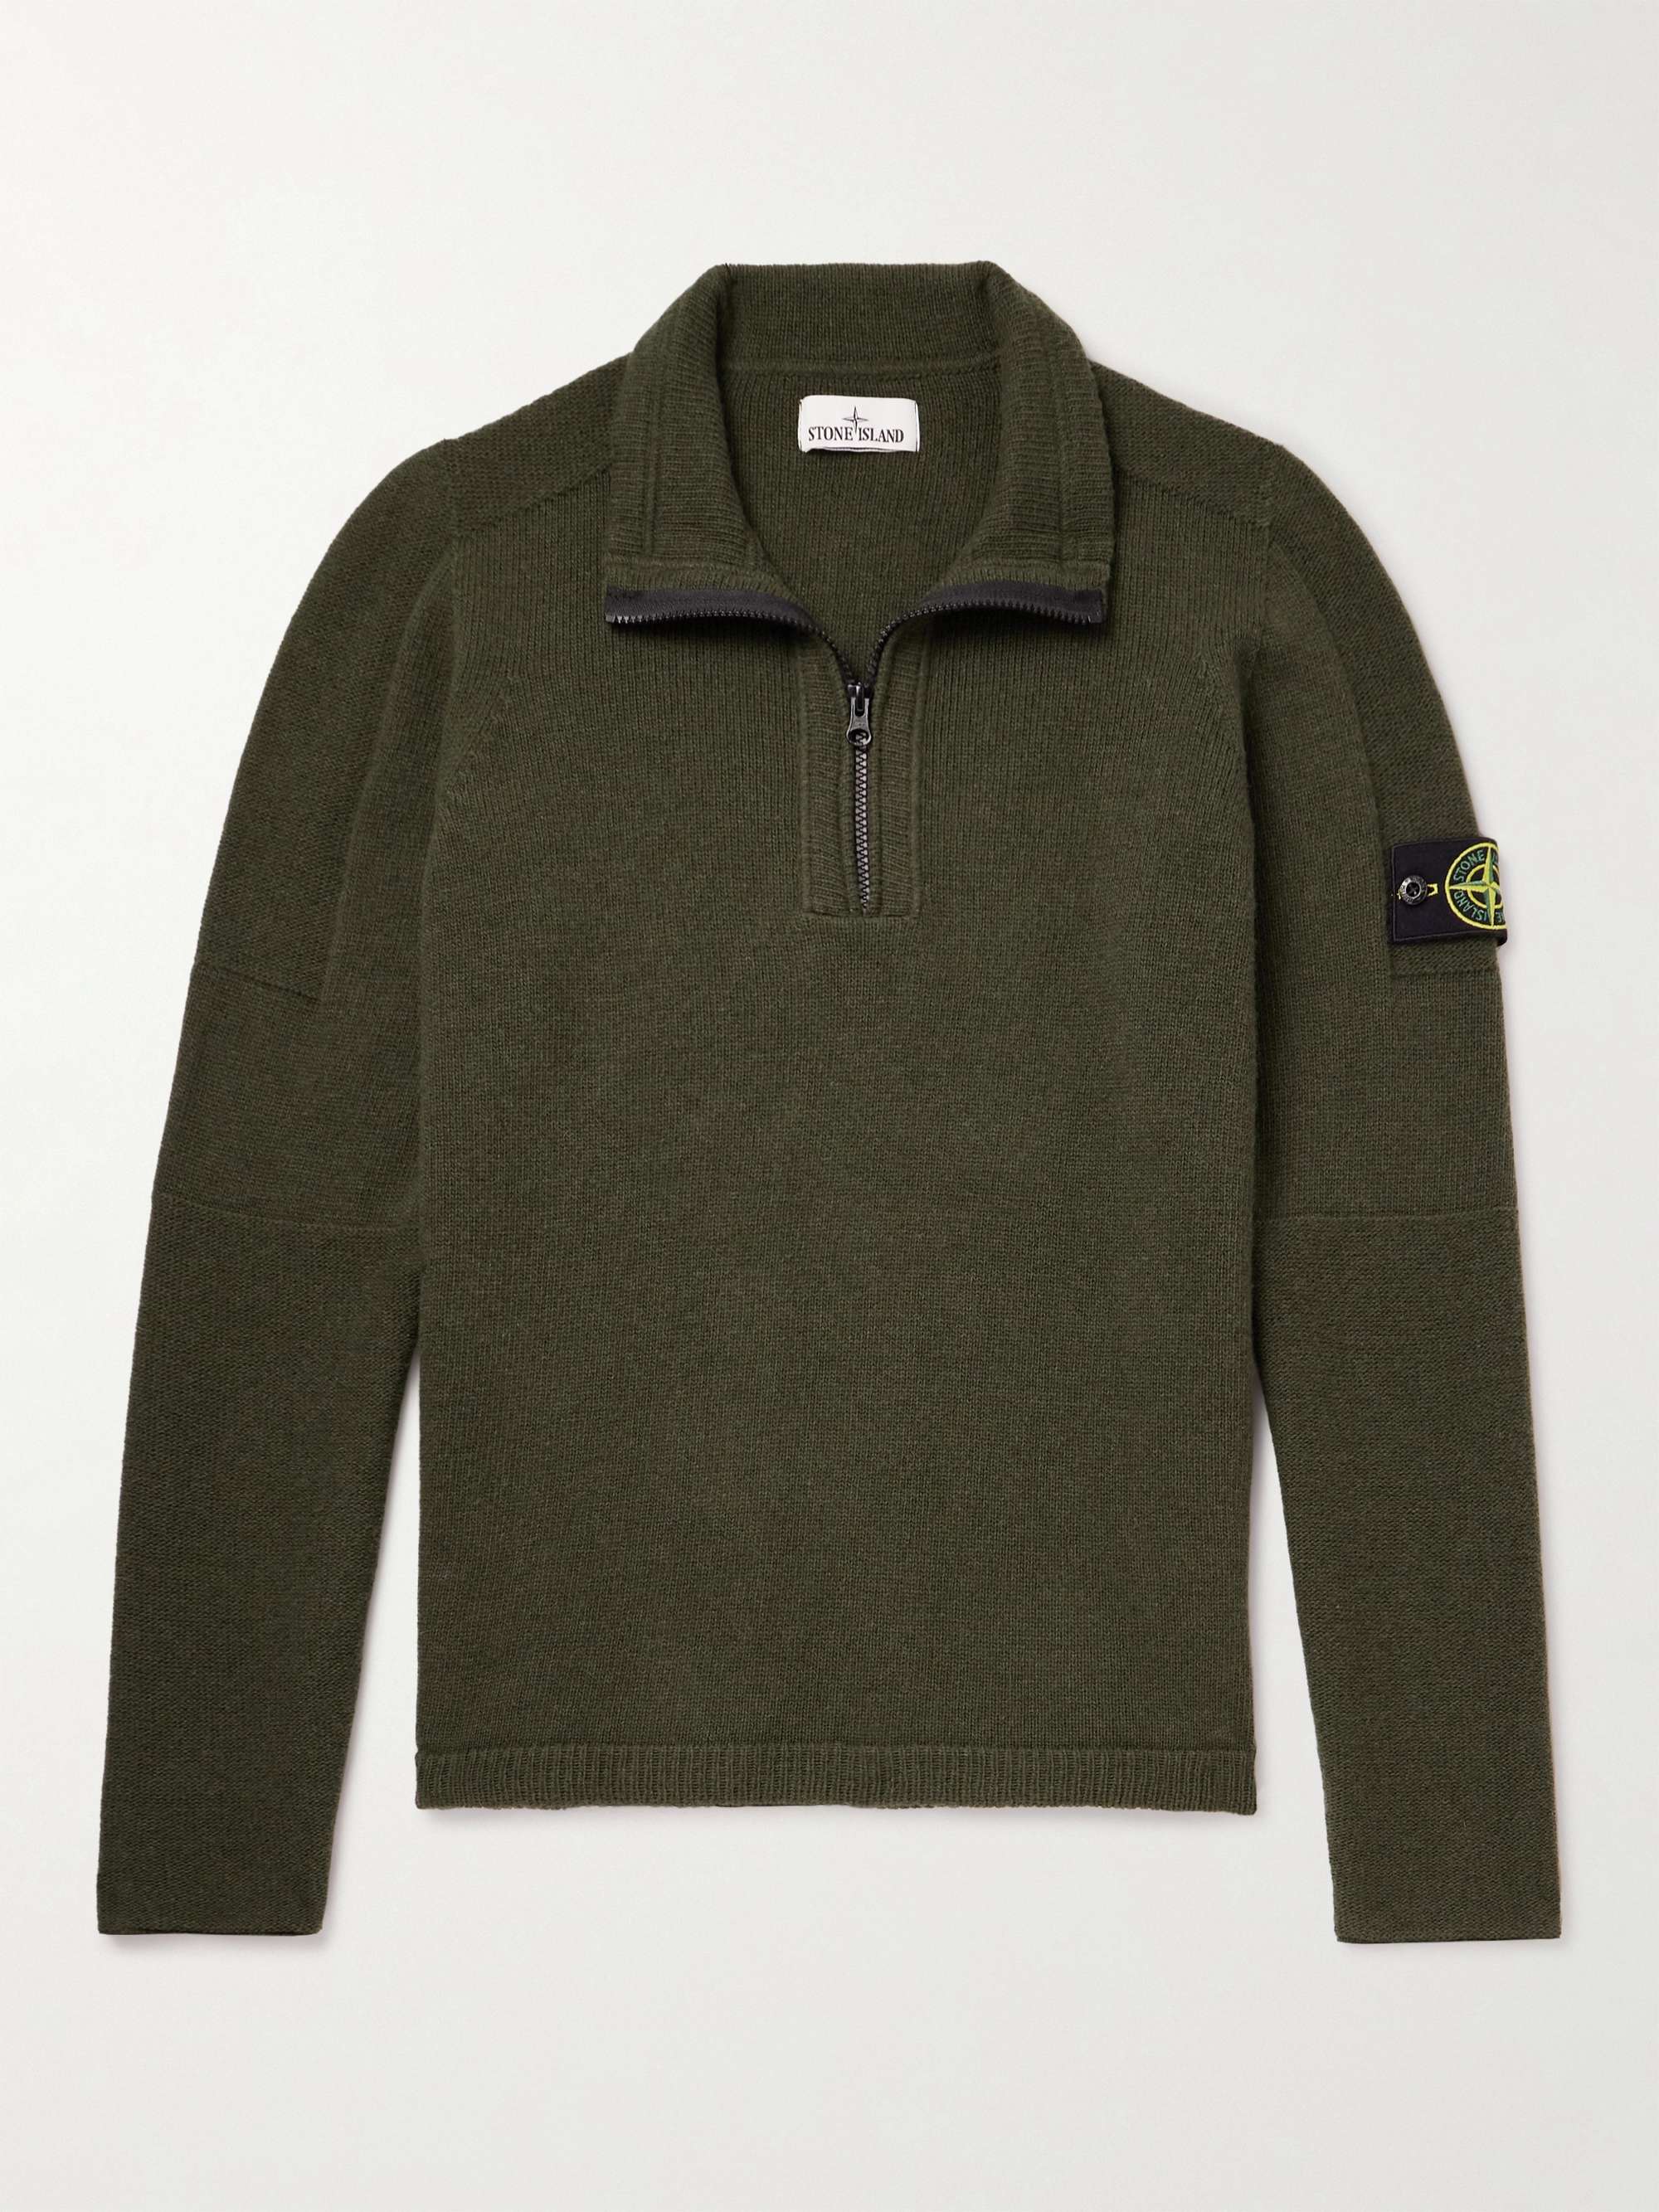 STONE ISLAND Logo-Appliqued Wool-Blend Half-Zip Sweater,Green